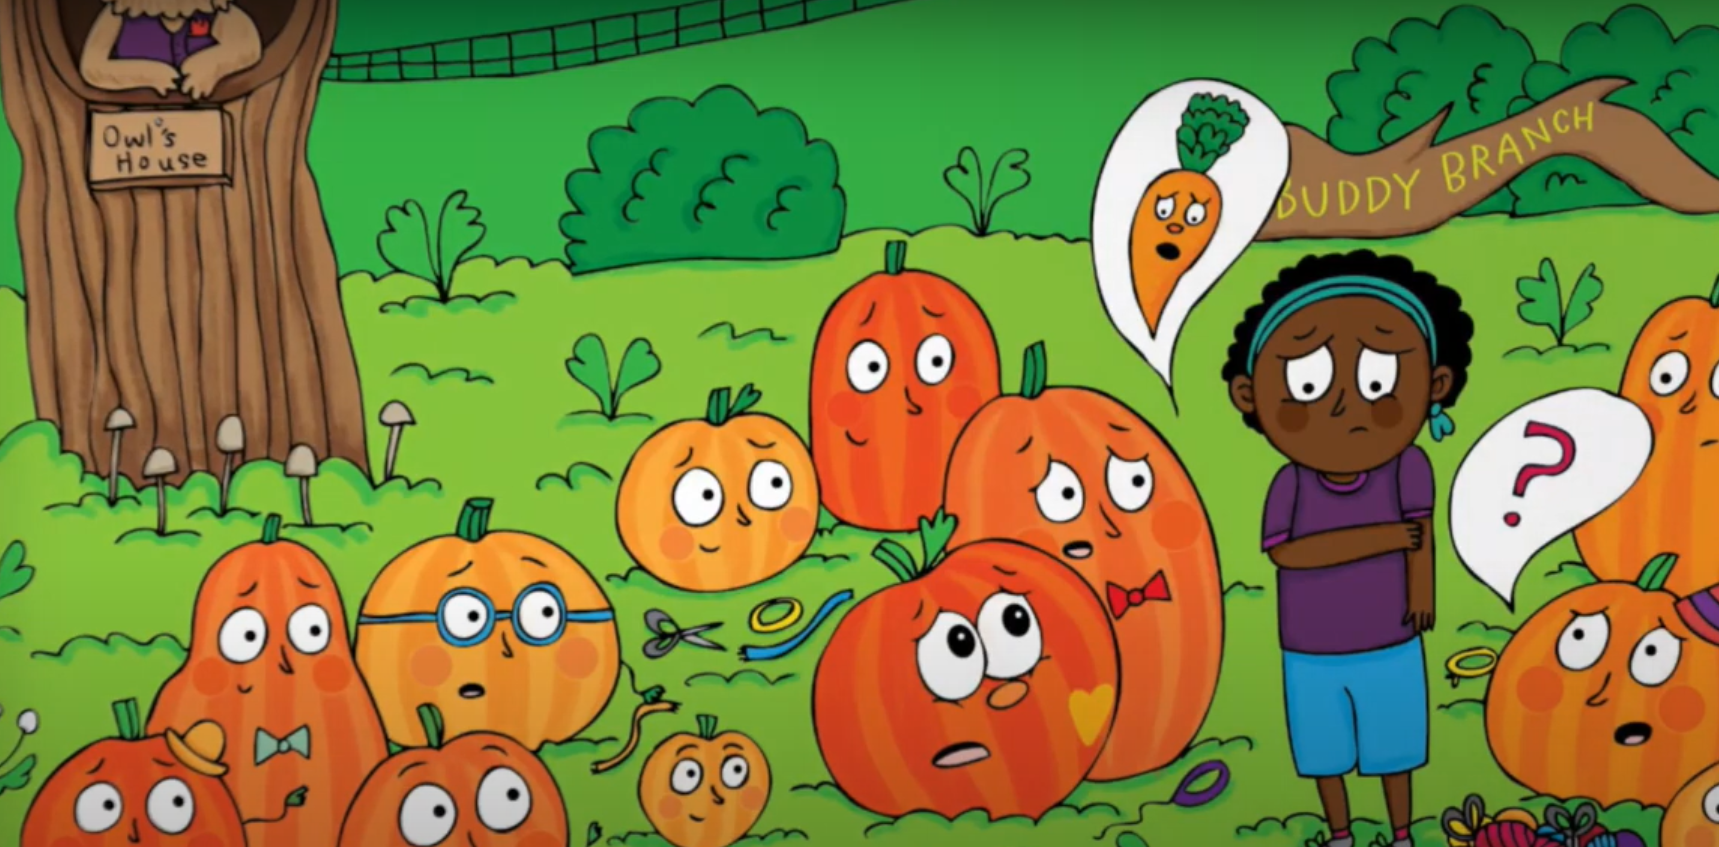 Pumpkin heroes cartoon